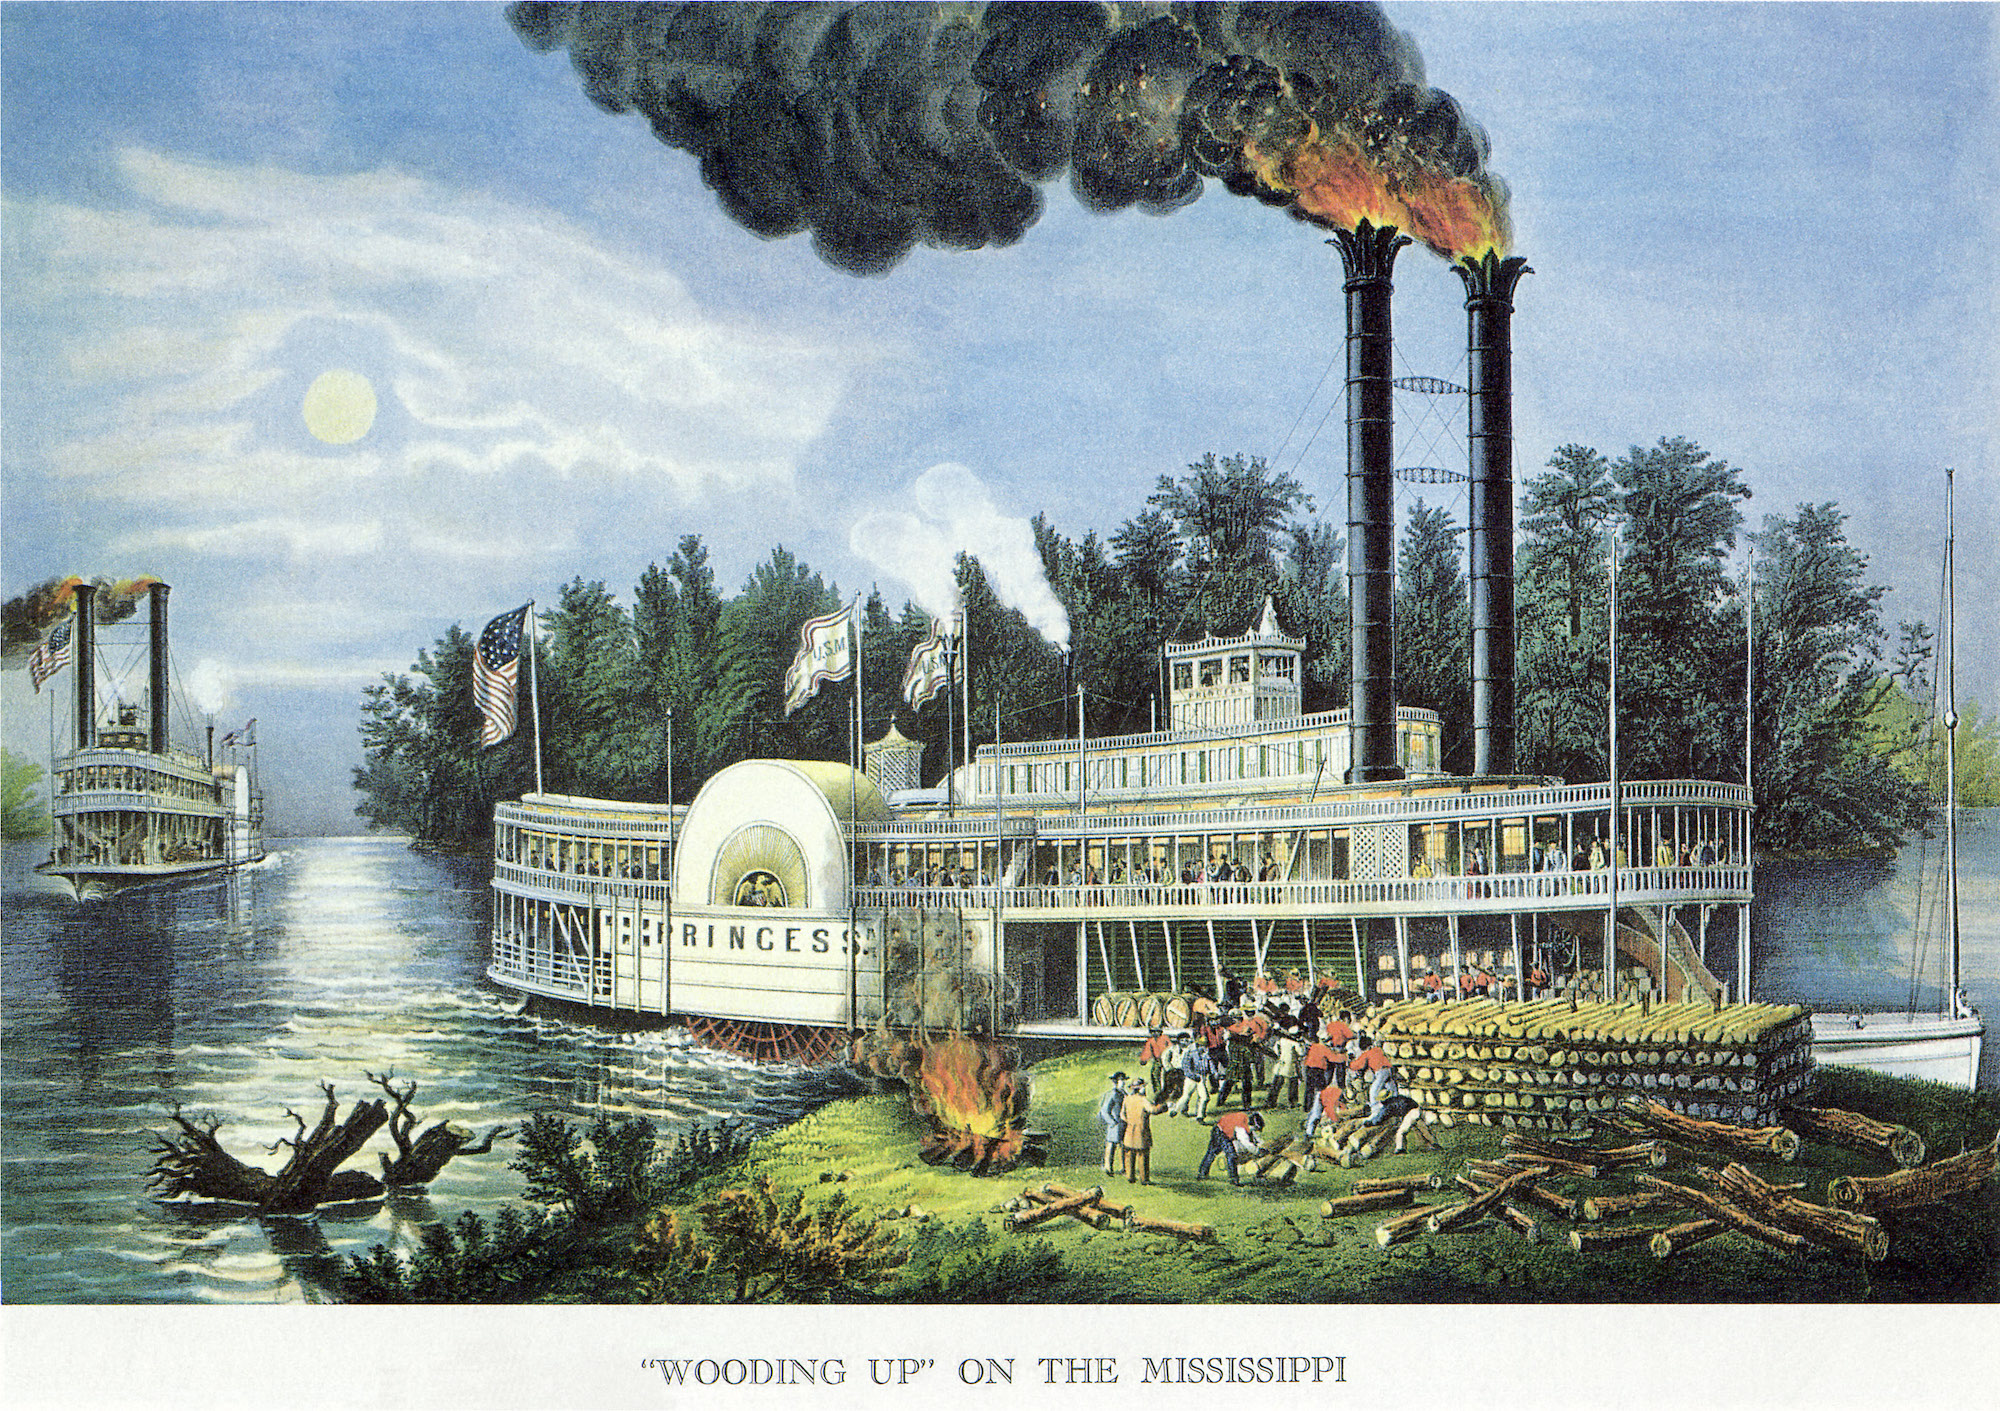 steamships 1900